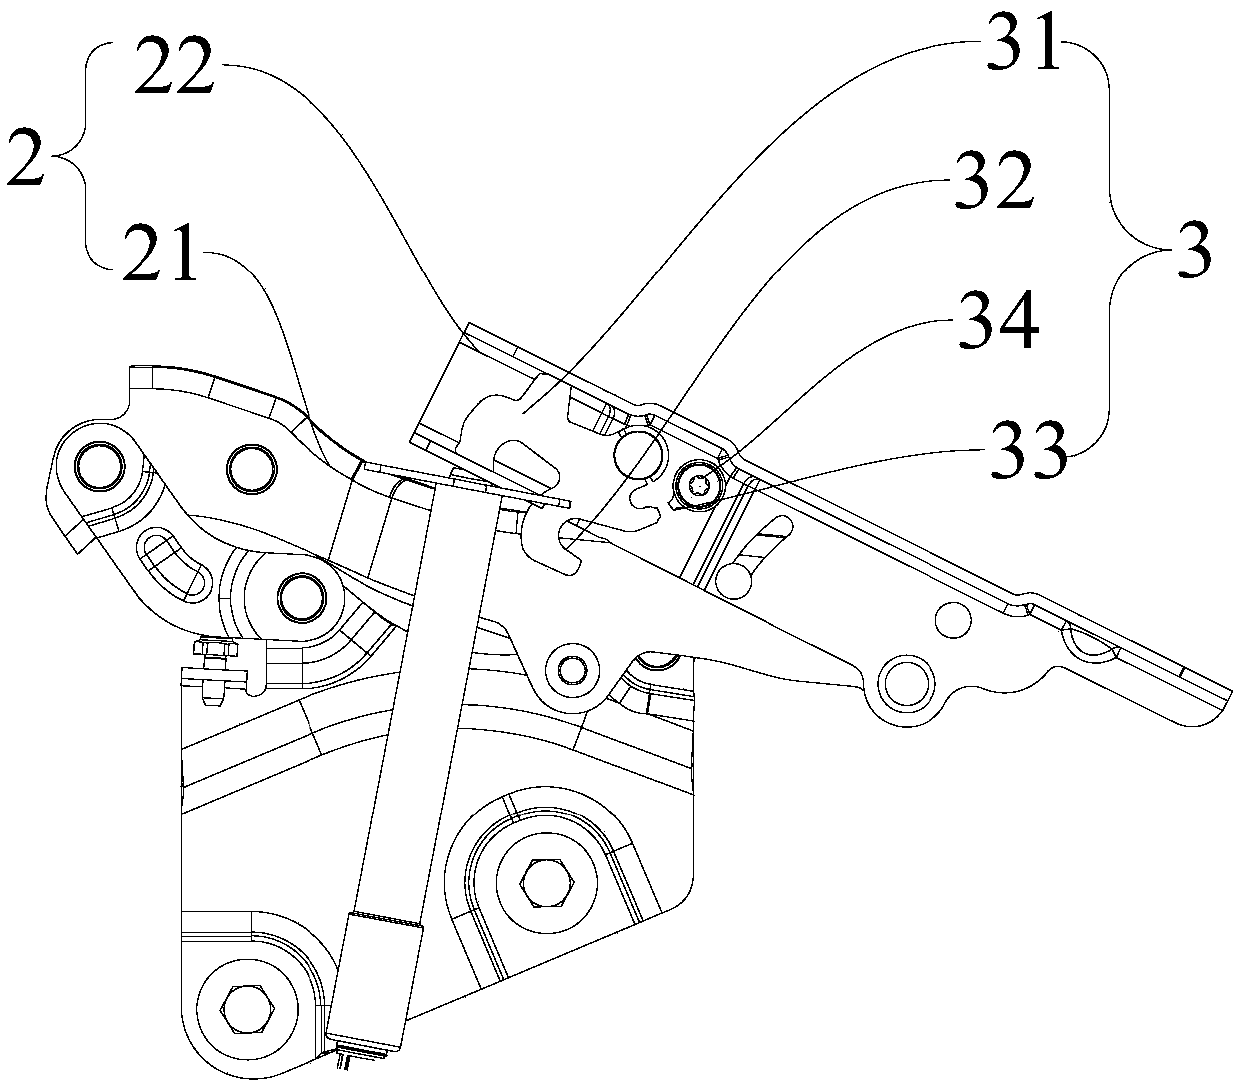 Engine hood hinge device for vehicle, and vehicle with engine hood hinge device